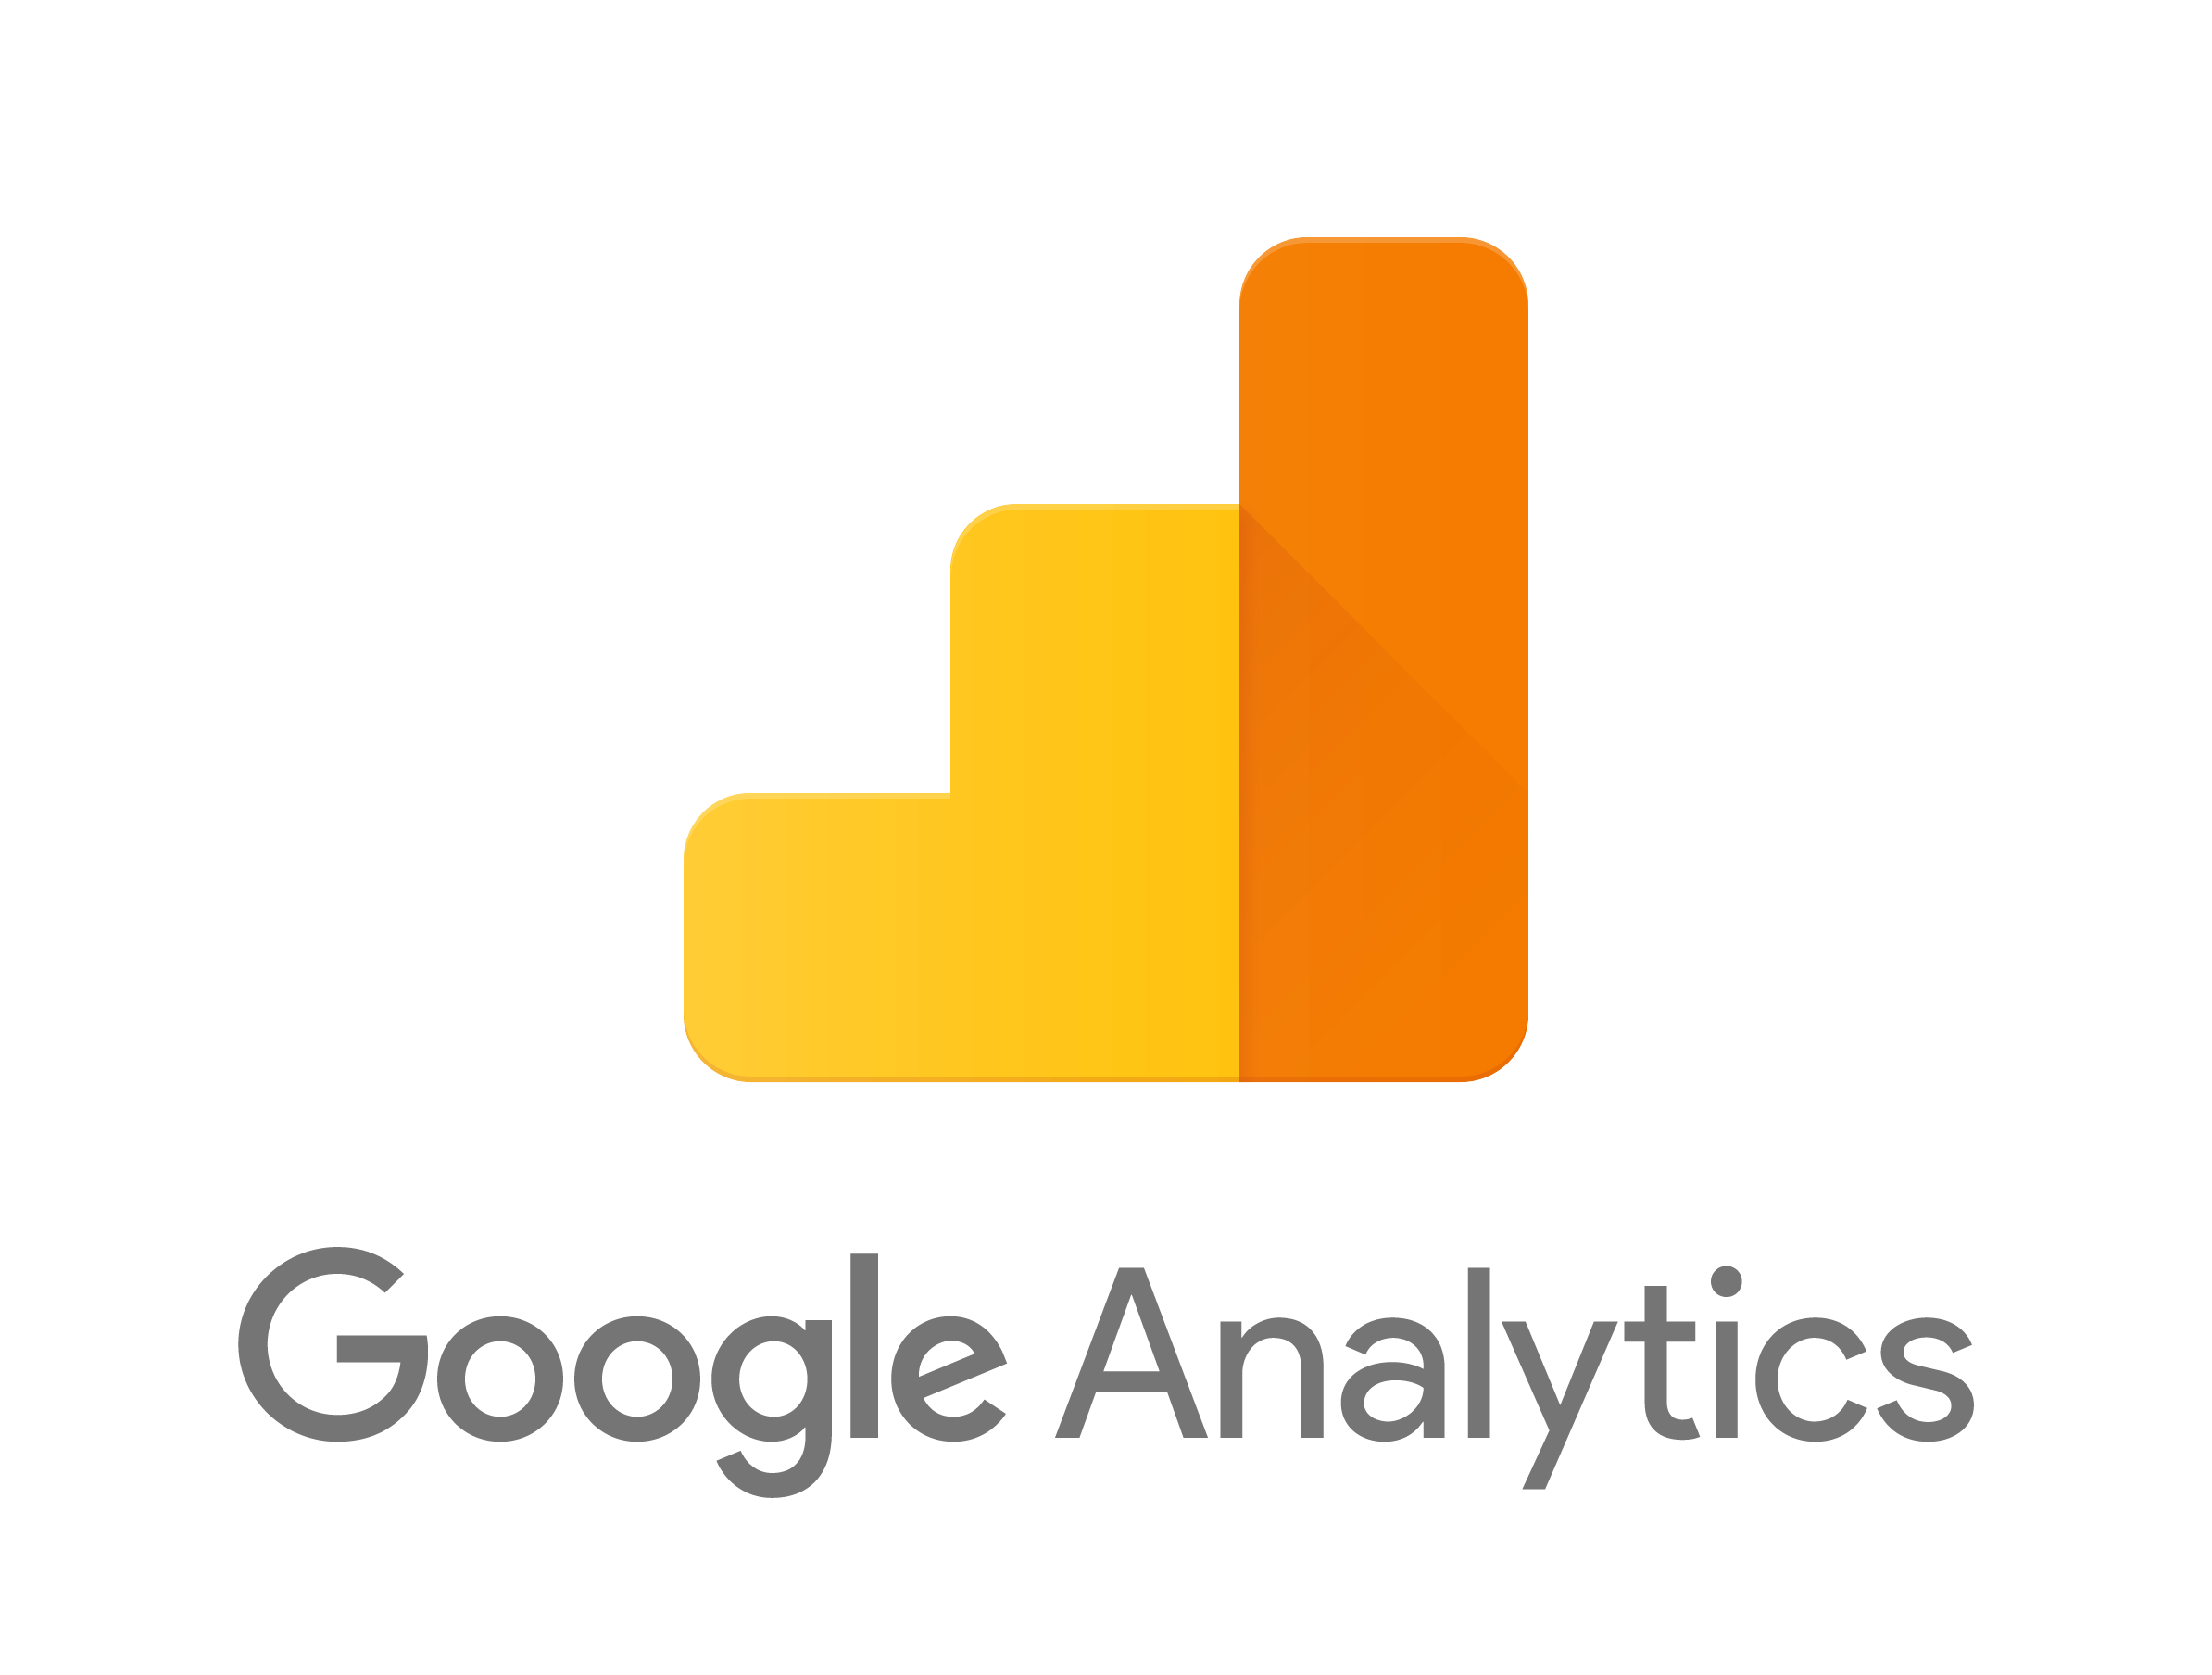 Developers Logo - Google Analytics Developer Branding Guidelines & Policies | Google ...